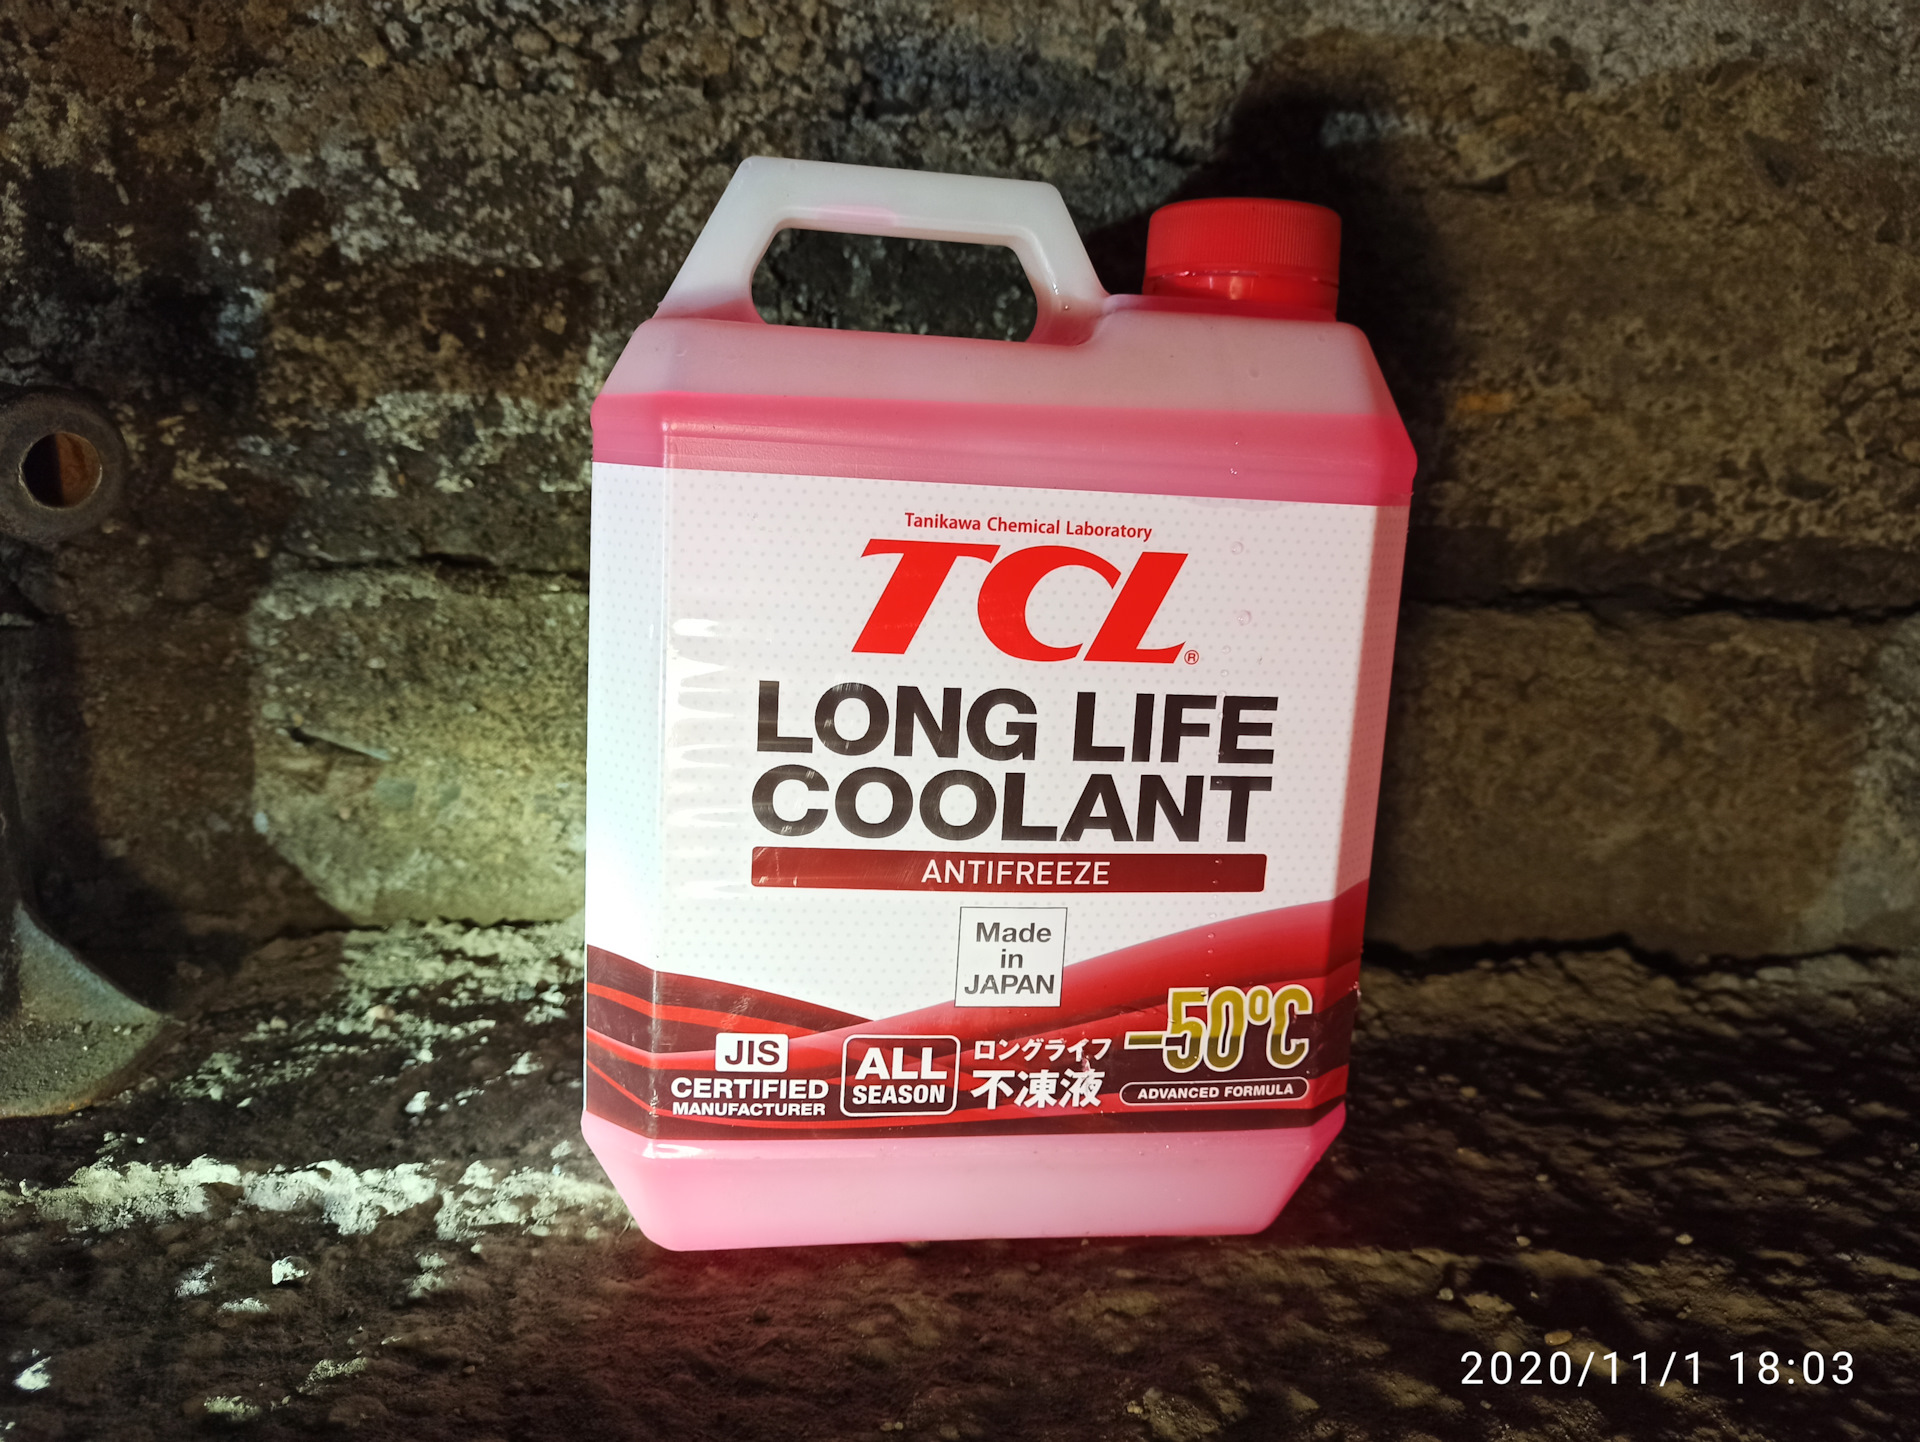 Tcl long life coolant. Антифриз long Life - 50. Антифриз Hi-Gear Gold Antifreeze long Life Formula g13. Long Life Coolant Hybrid -50. TCL long Life Coolant Red -40°c.